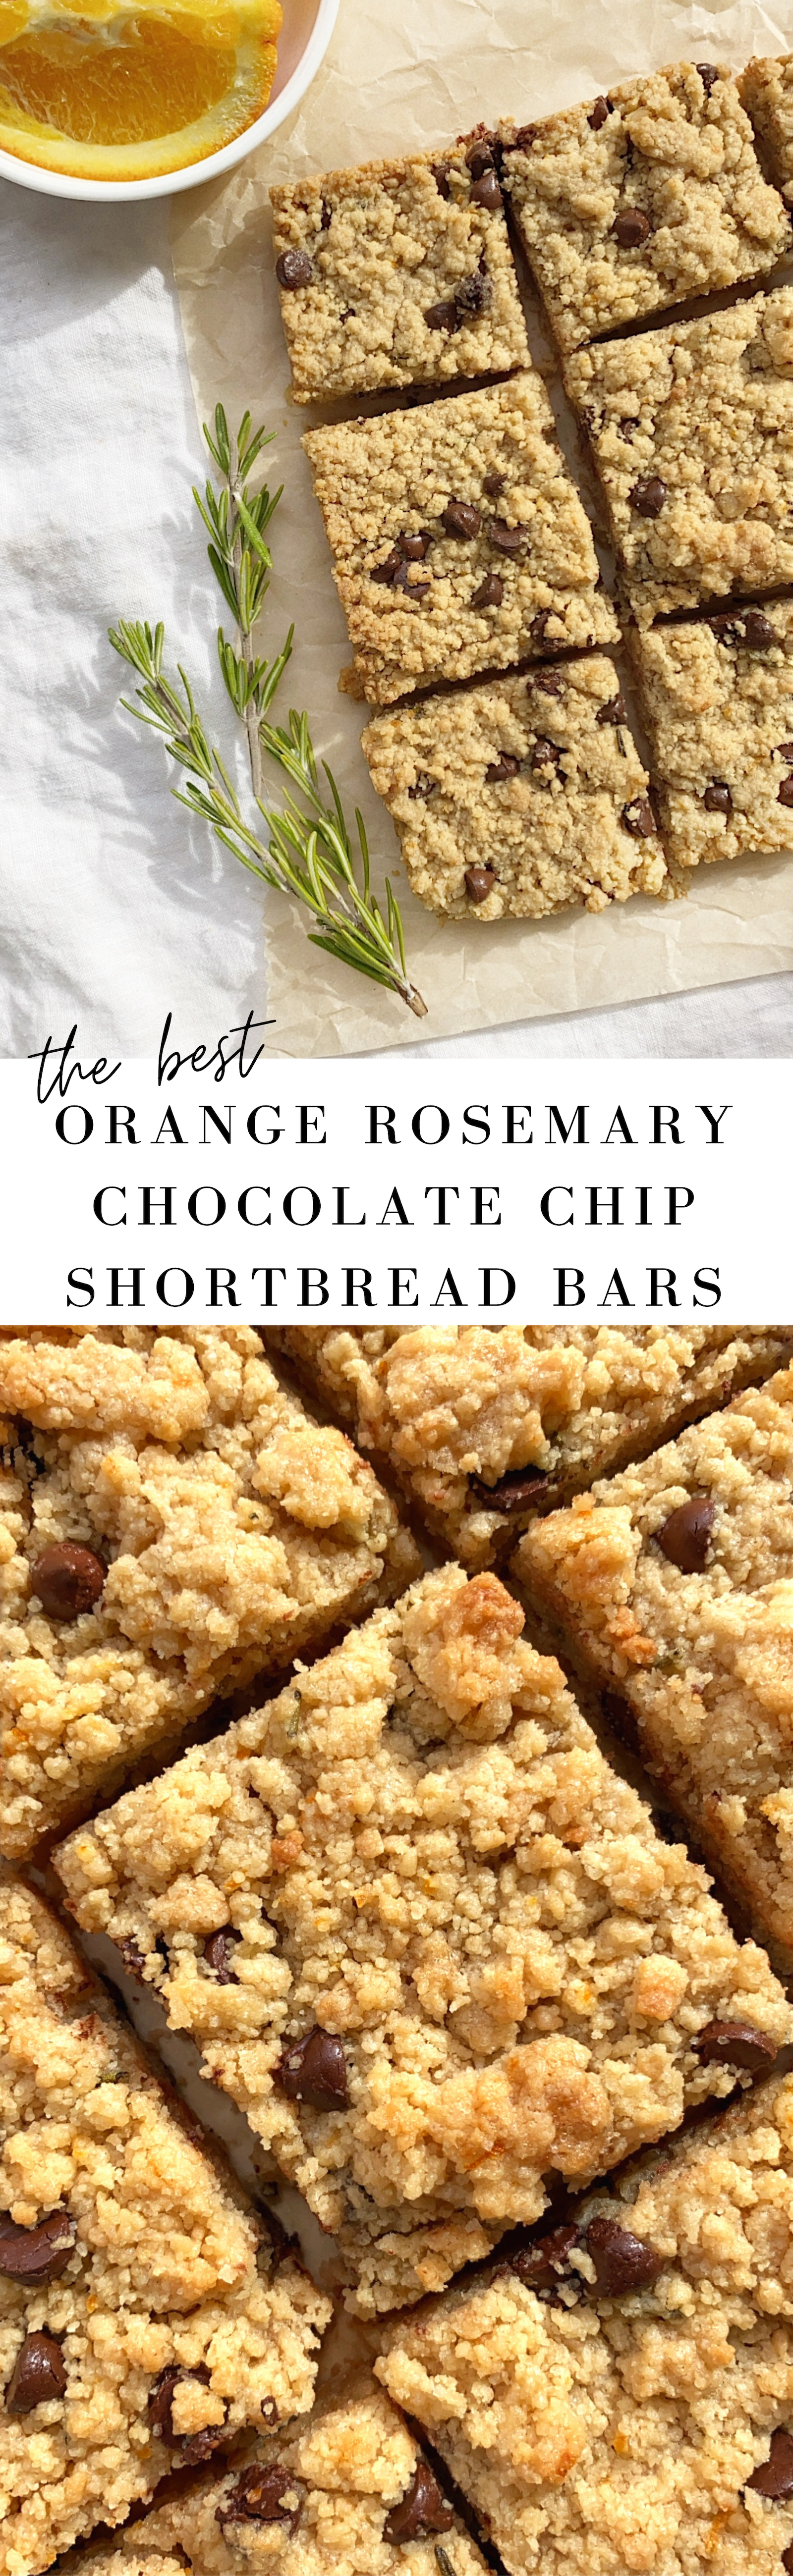 Orange Rosemary Chocolate Chip Shortbread Bars Recipe